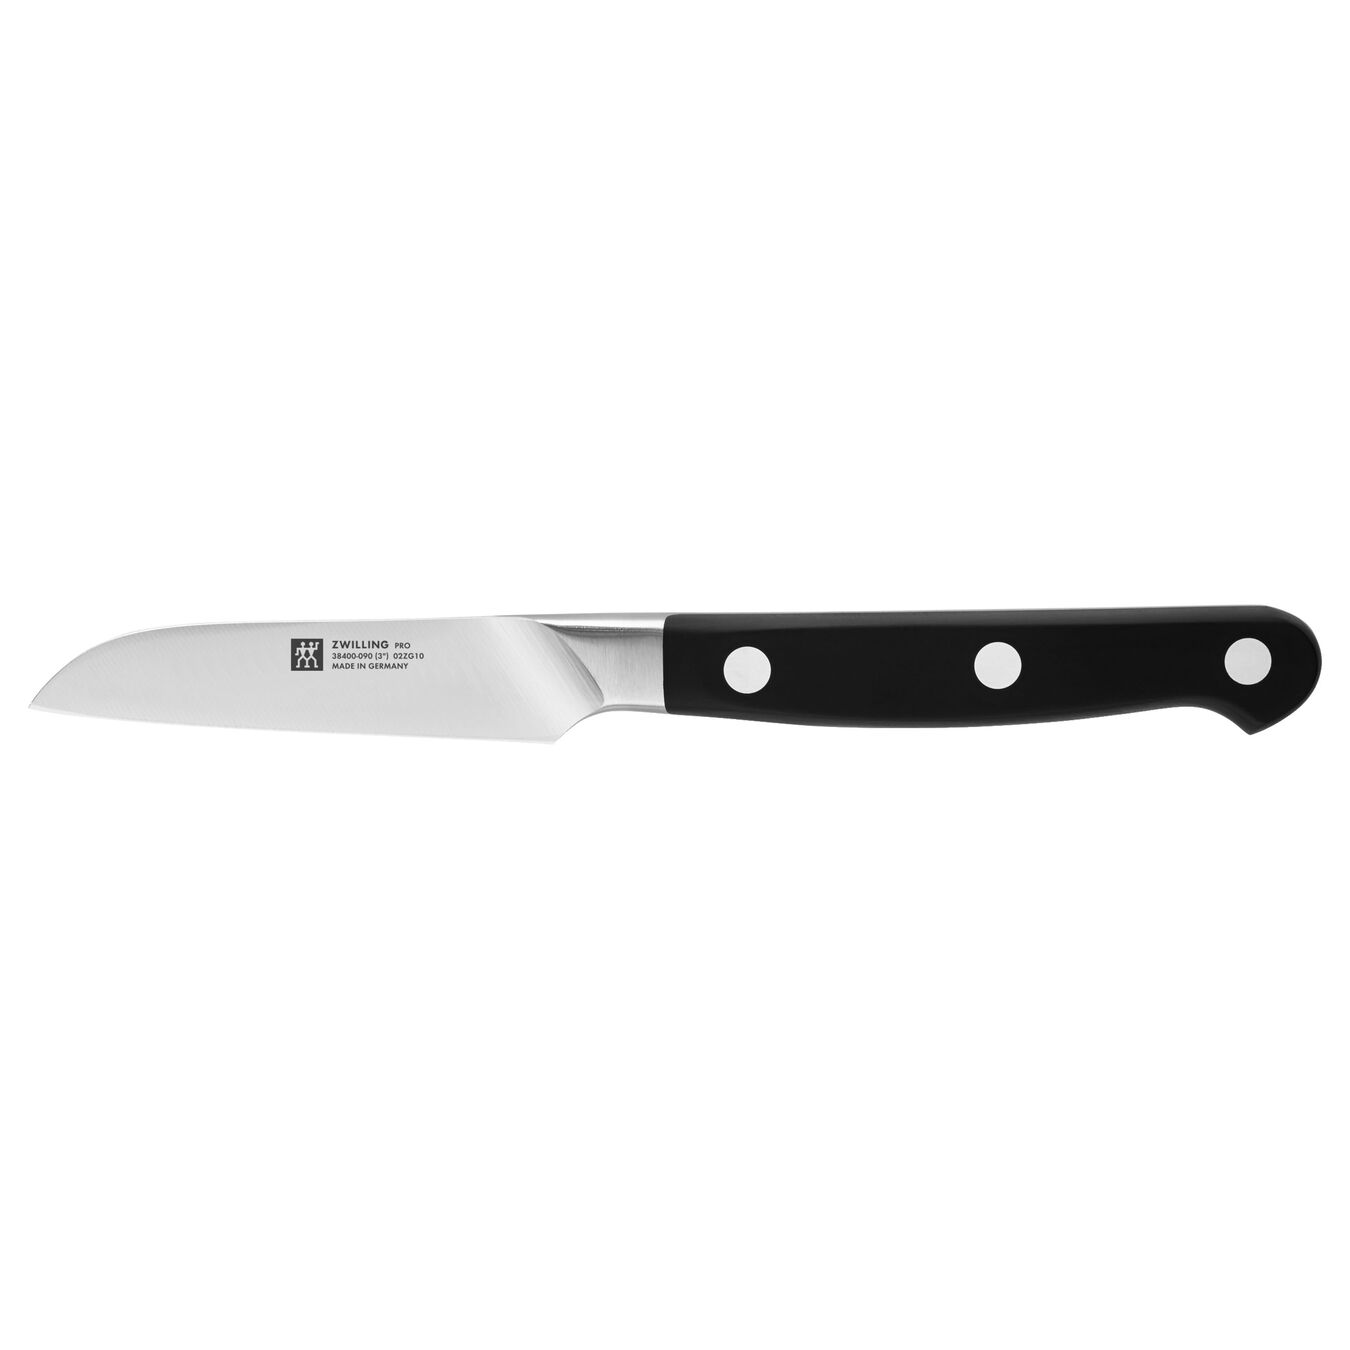 3.5-inch, Kudamono Paring Knife,,large 1